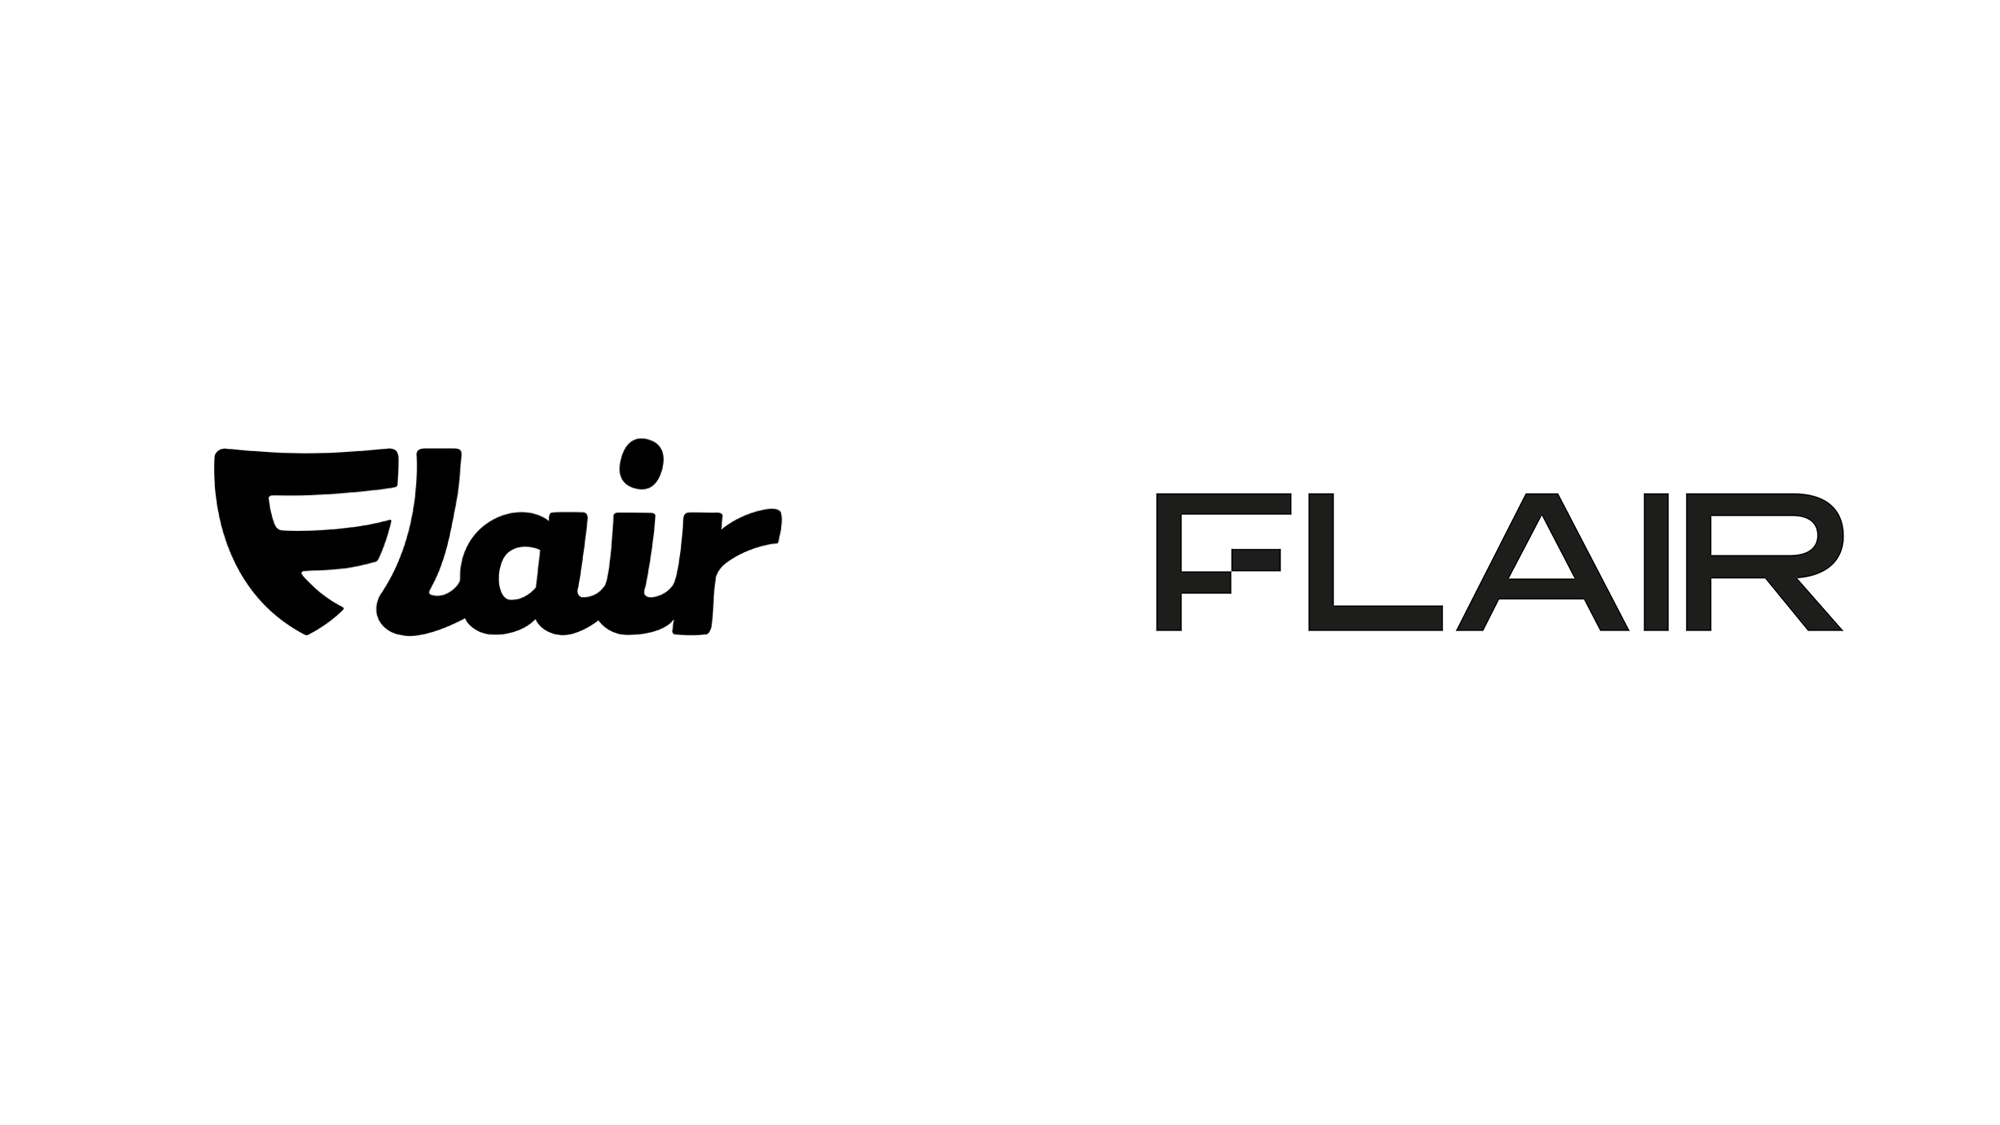 Flair Logo PNG Transparent & SVG Vector - Freebie Supply